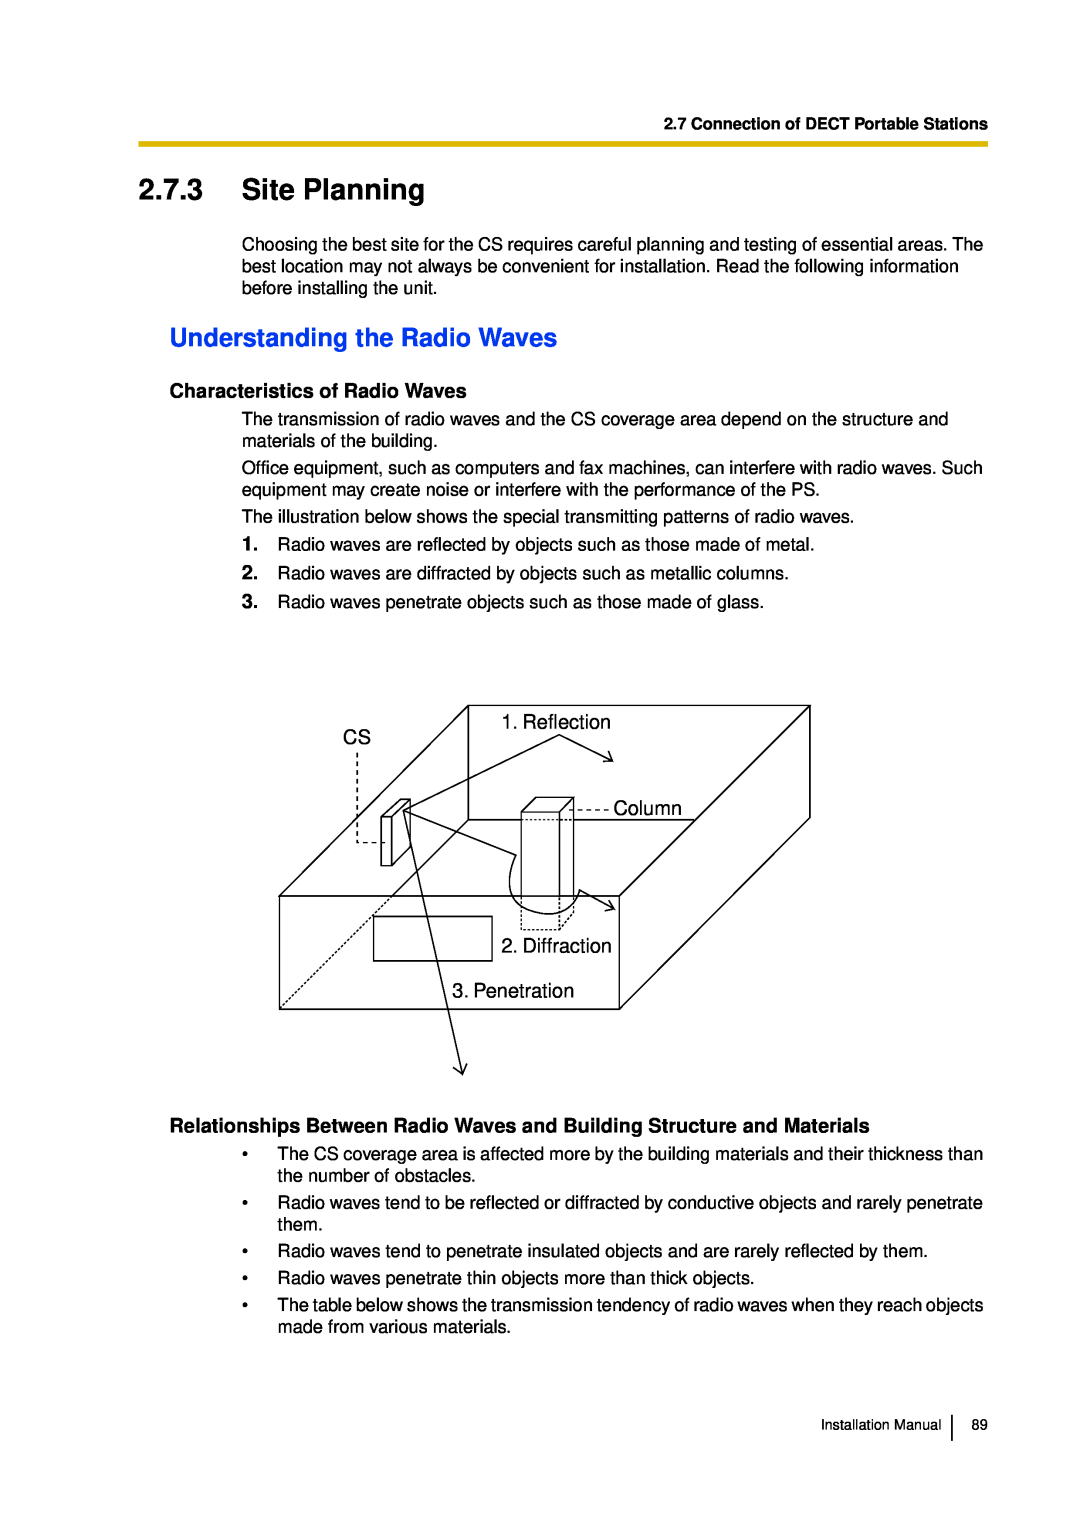 Panasonic KX-TDA30 installation manual 2.7.3Site Planning, Understanding the Radio Waves 